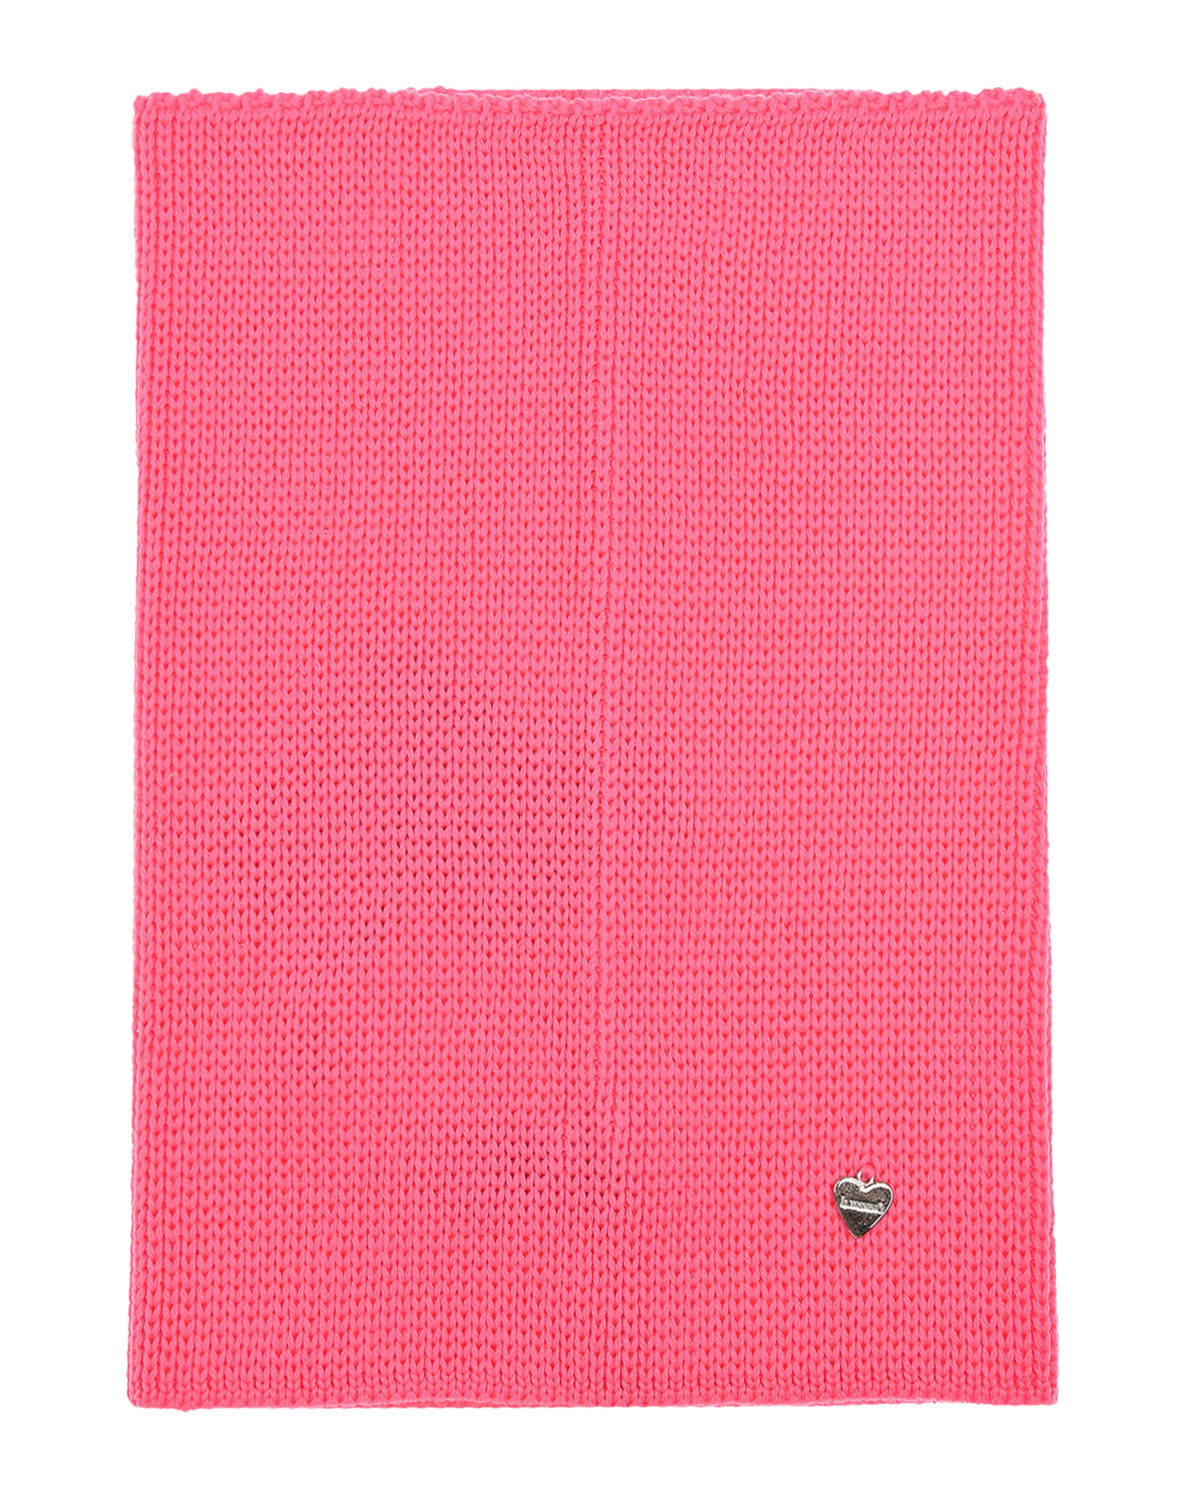 Неоново-розовый шарф-ворот Il Trenino детское, размер unica